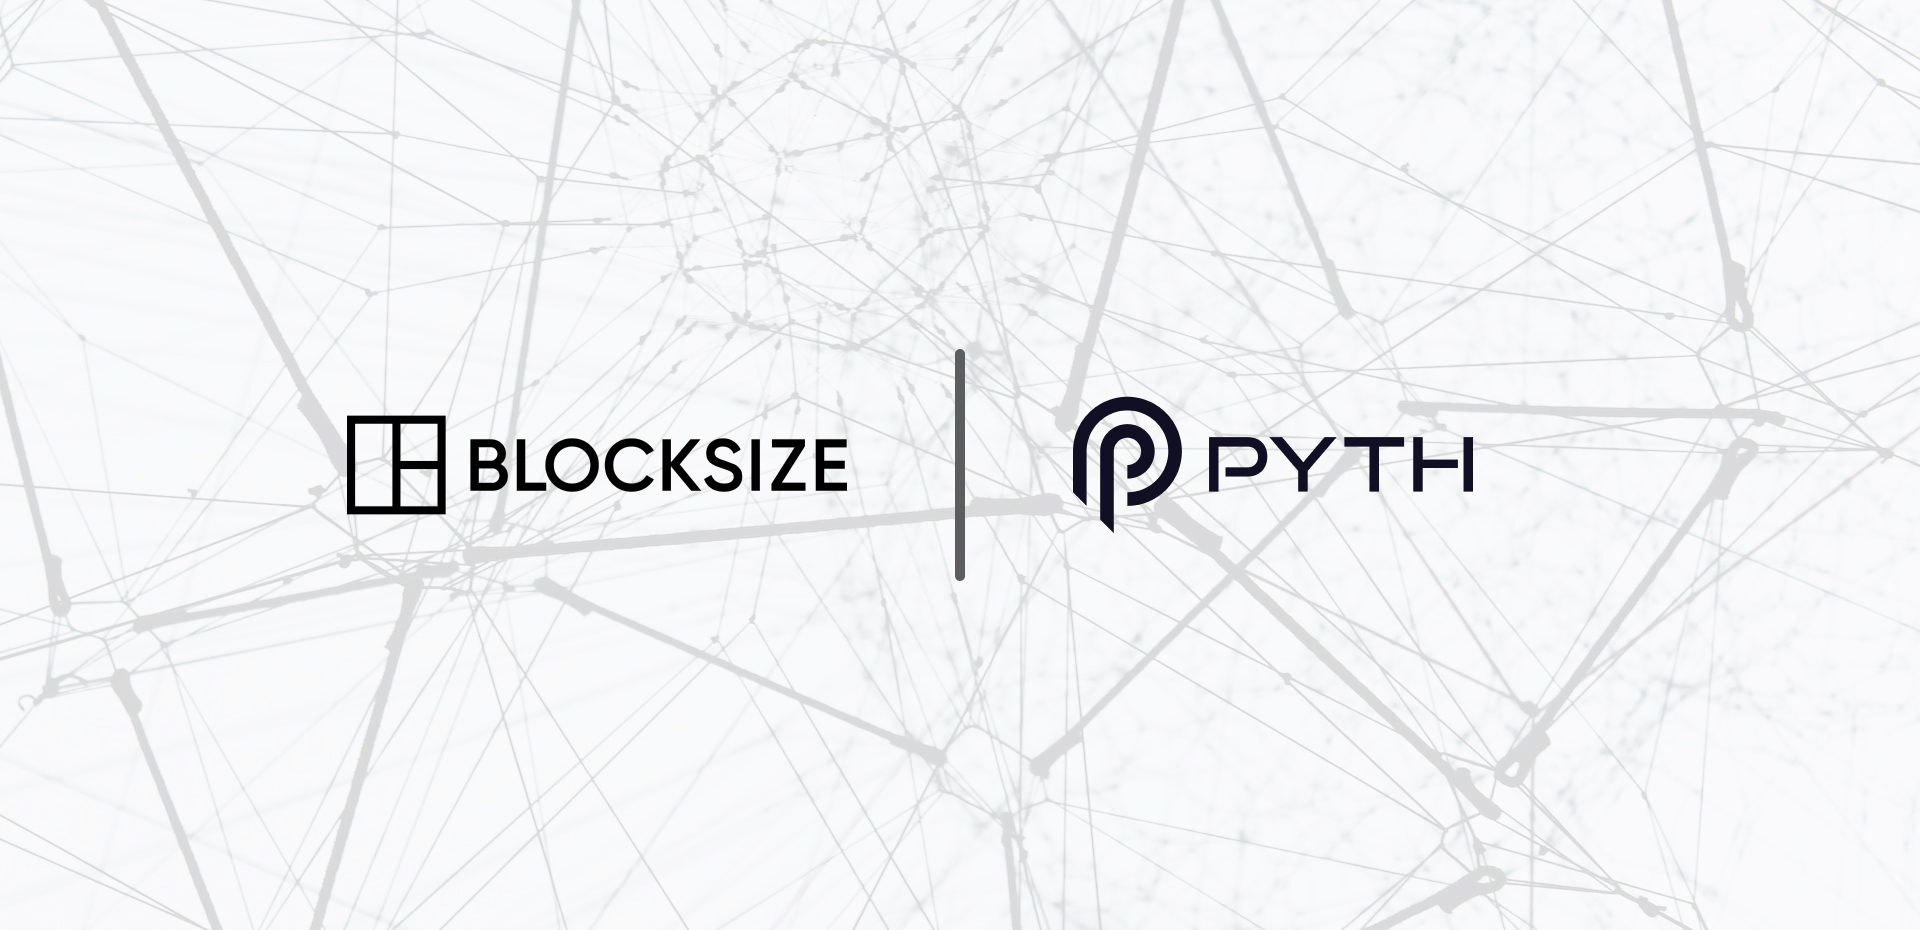 Blocksize-Pyth-partnership announcement - press release - market data - oracles - blockchain